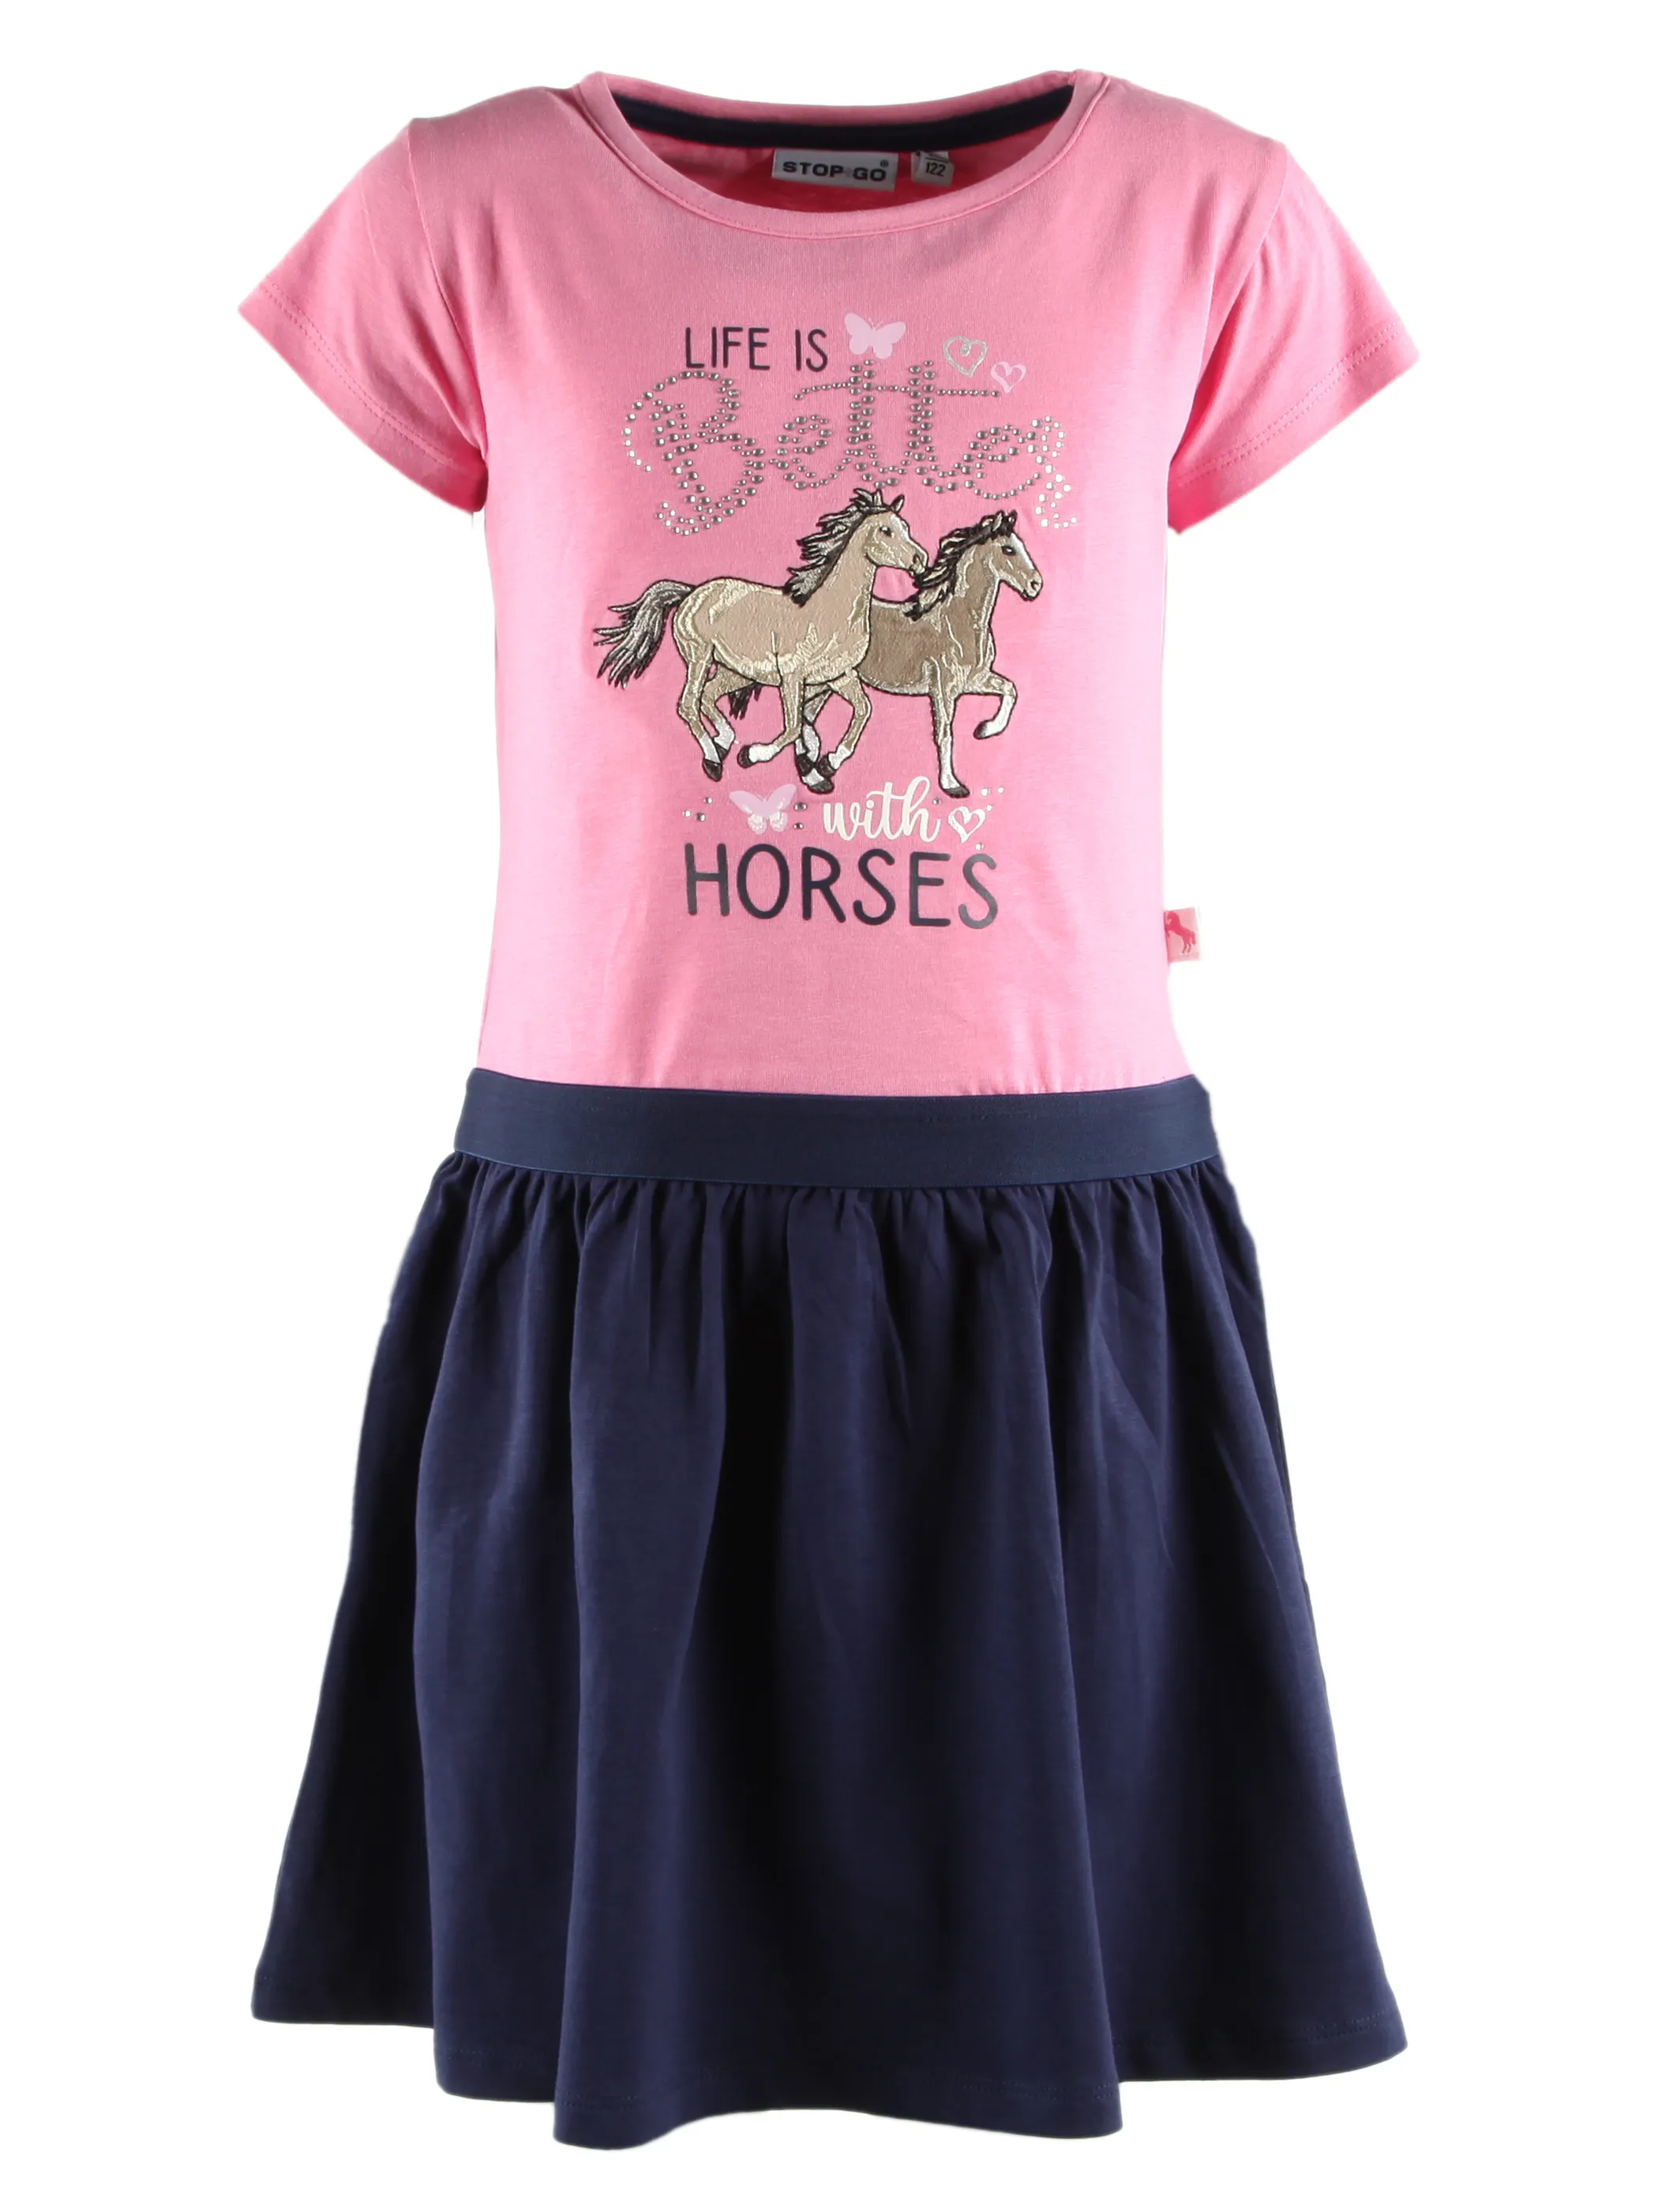 Stop + Go KM Kleid mit Pferde Frontdruck in pink Pink 890328 PINK 1